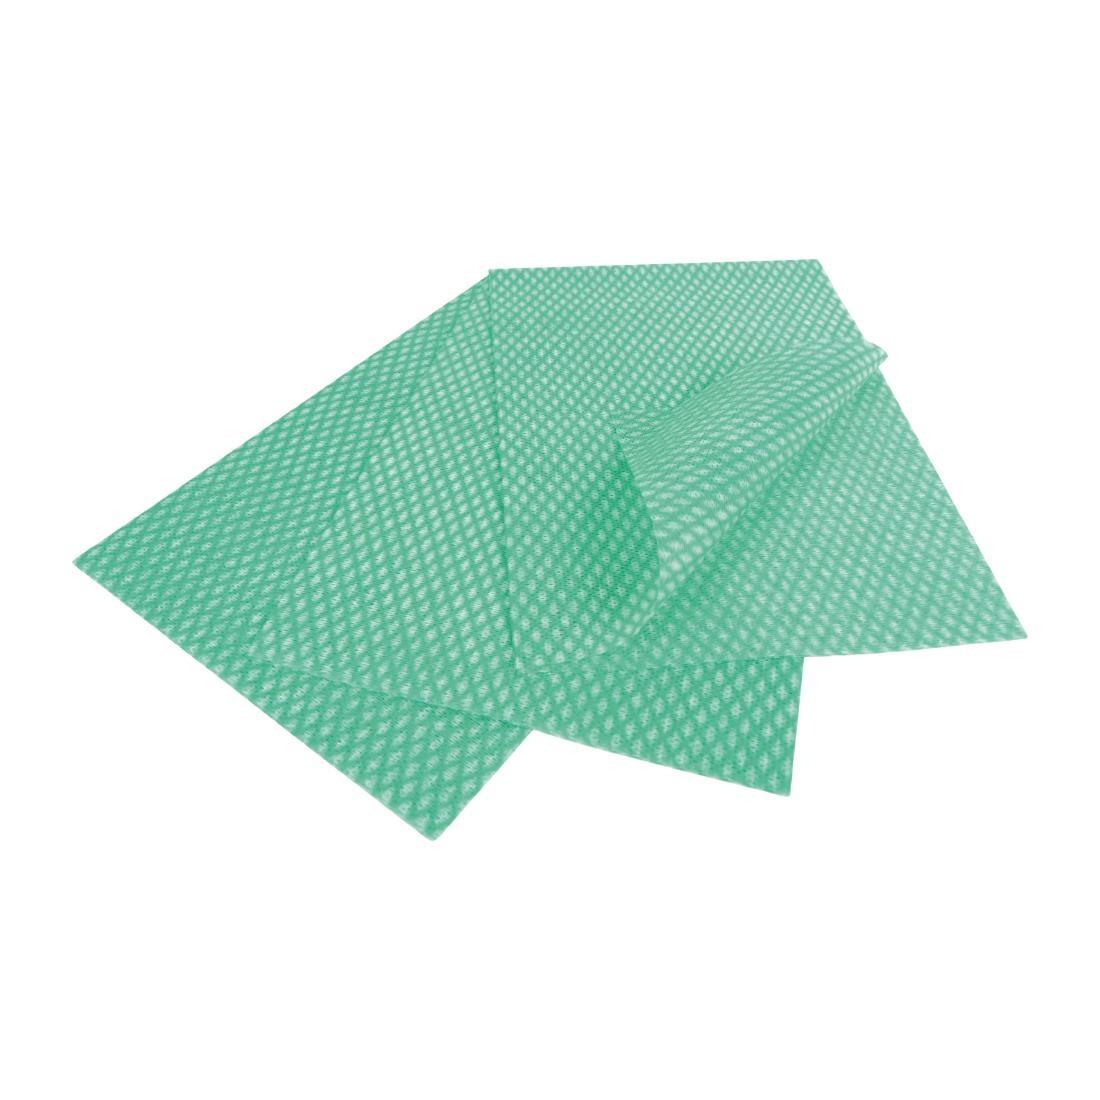 EcoTech Envirolite Super Antibacterial Cleaning Cloths Green (50 Pack) - FA203  - 1